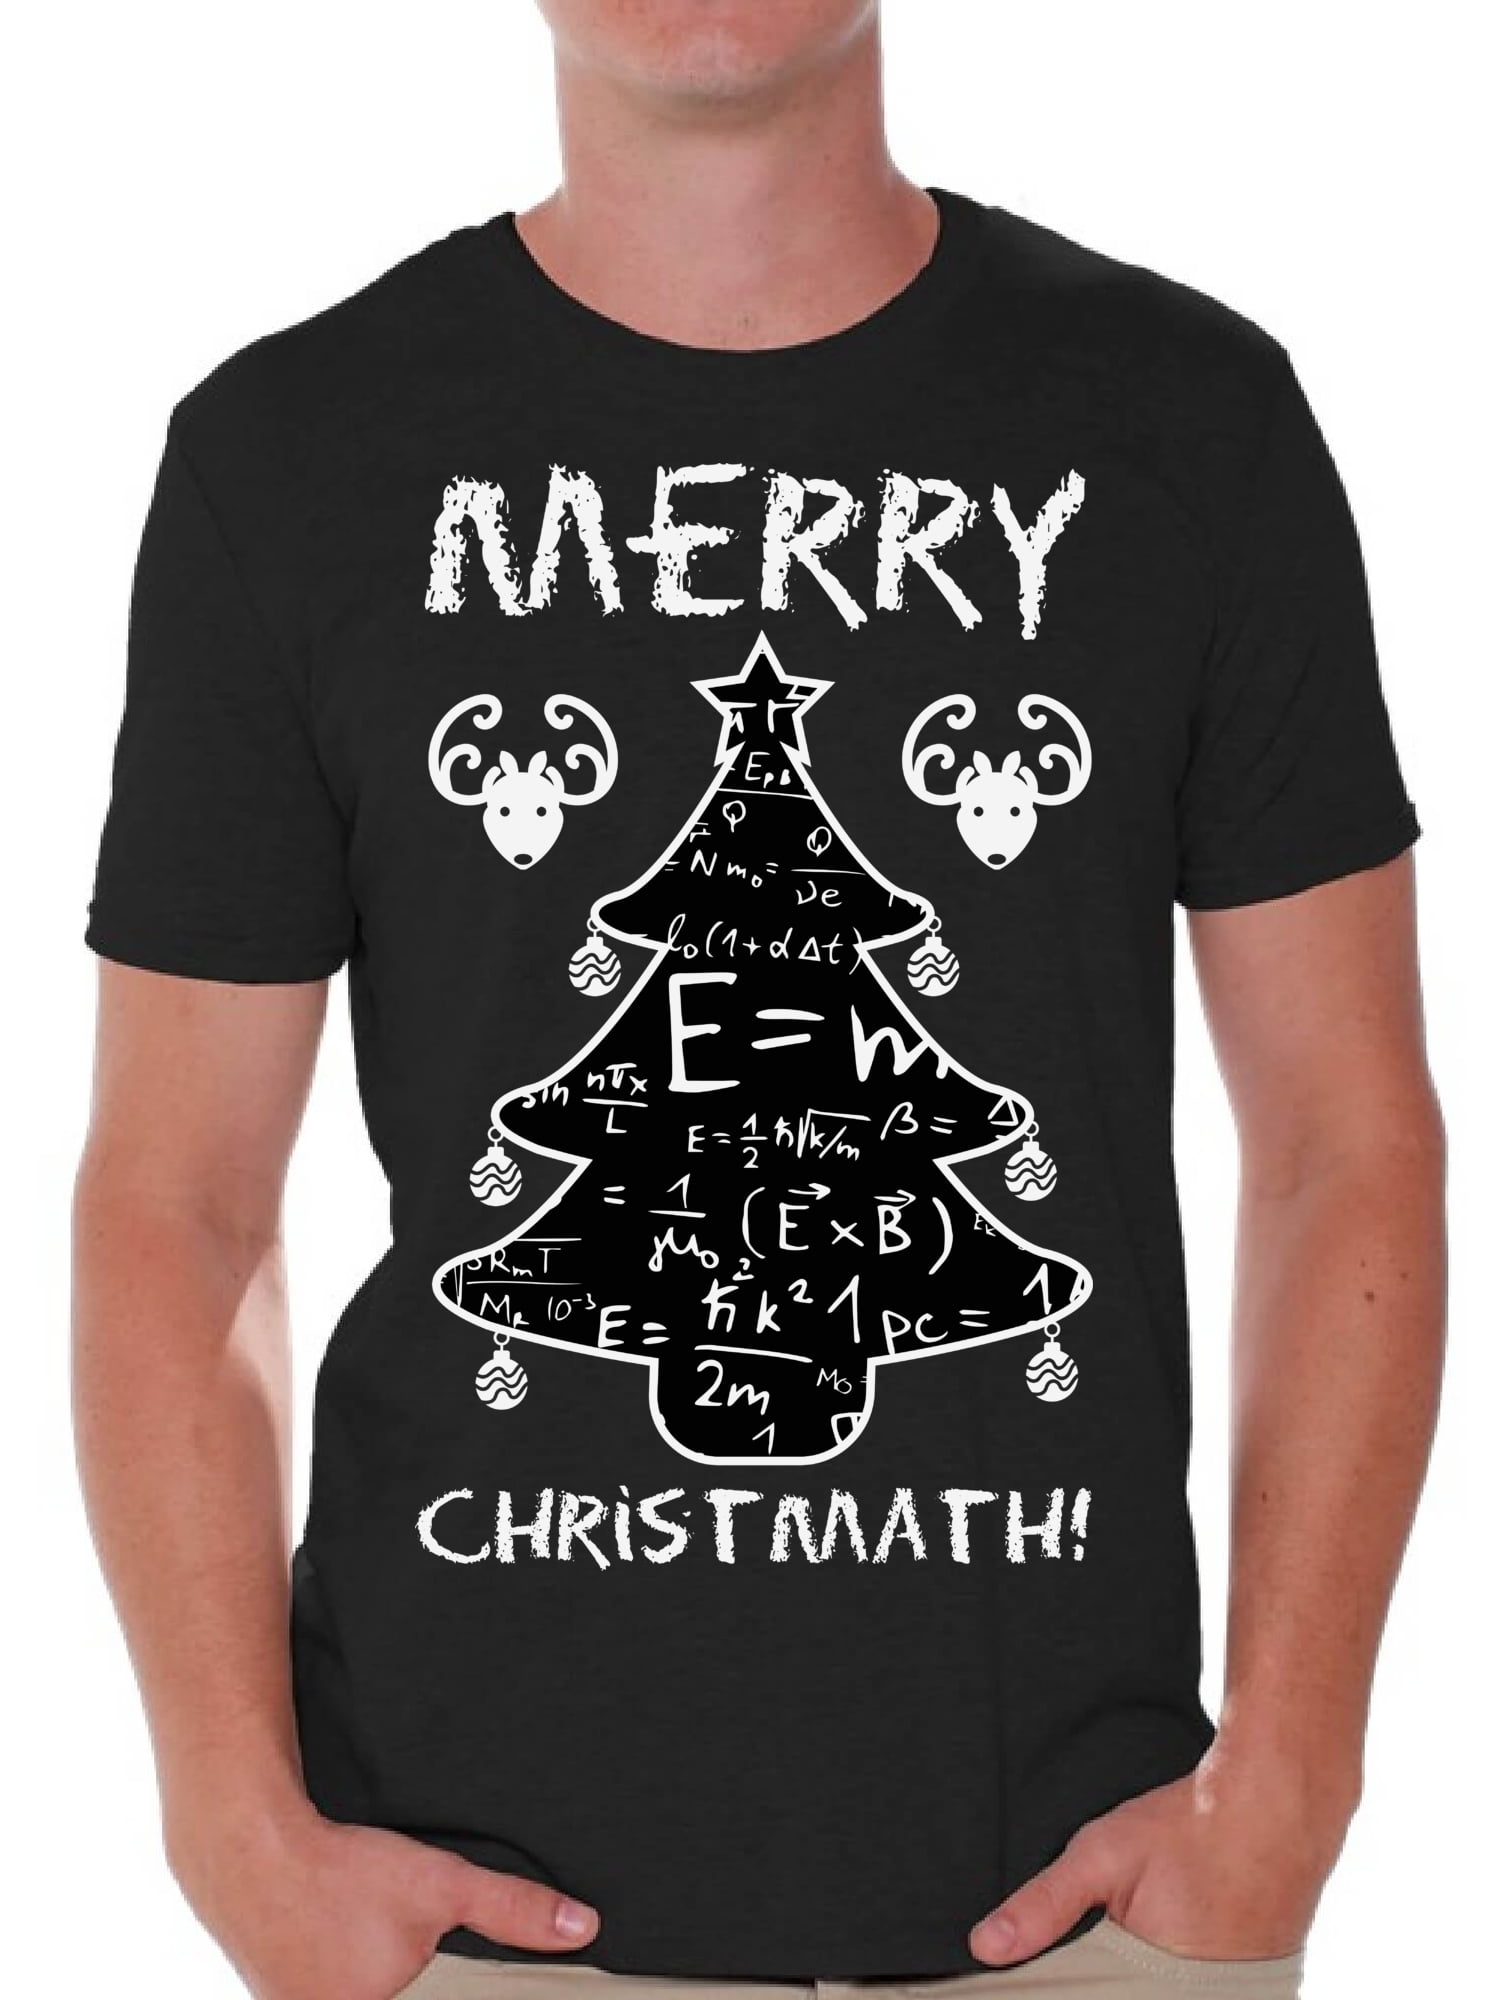 I Love Xmas V-Neck T-shirt Christmas Tree Holiday Spirit Naughty or Nice Tee